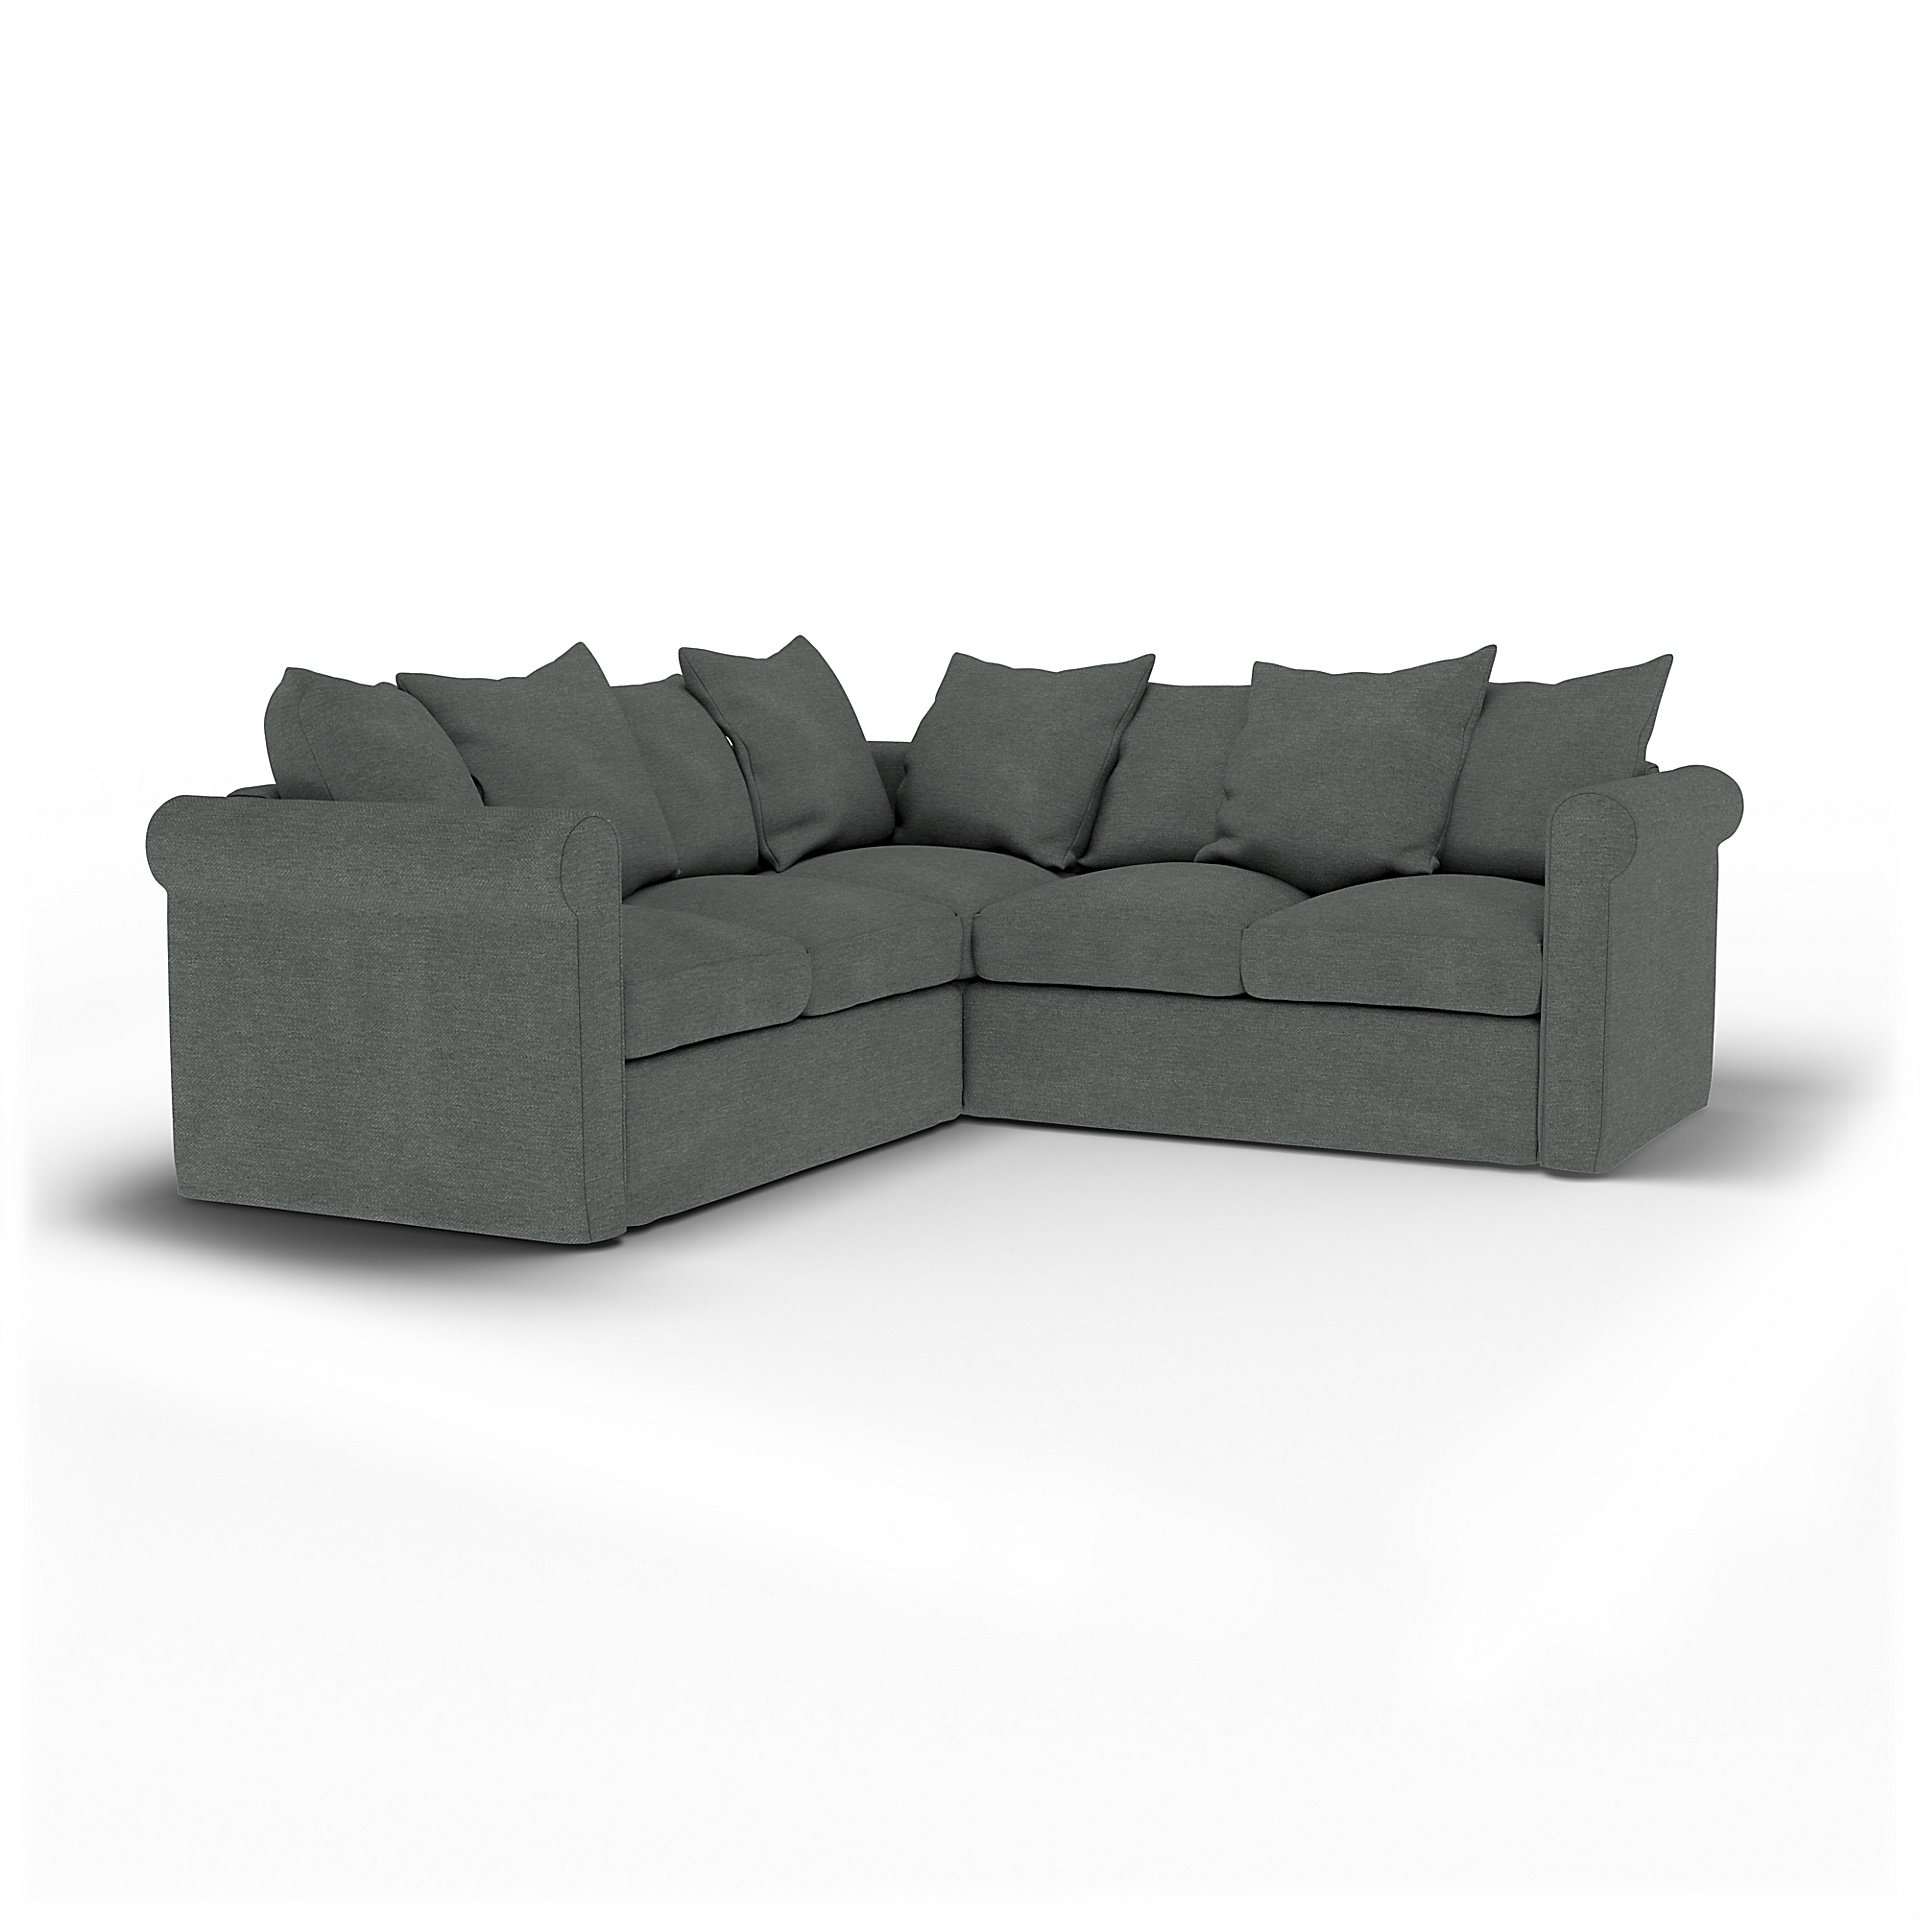 IKEA - Gronlid 4 Seater Corner Sofa Cover, Laurel, Boucle & Texture - Bemz